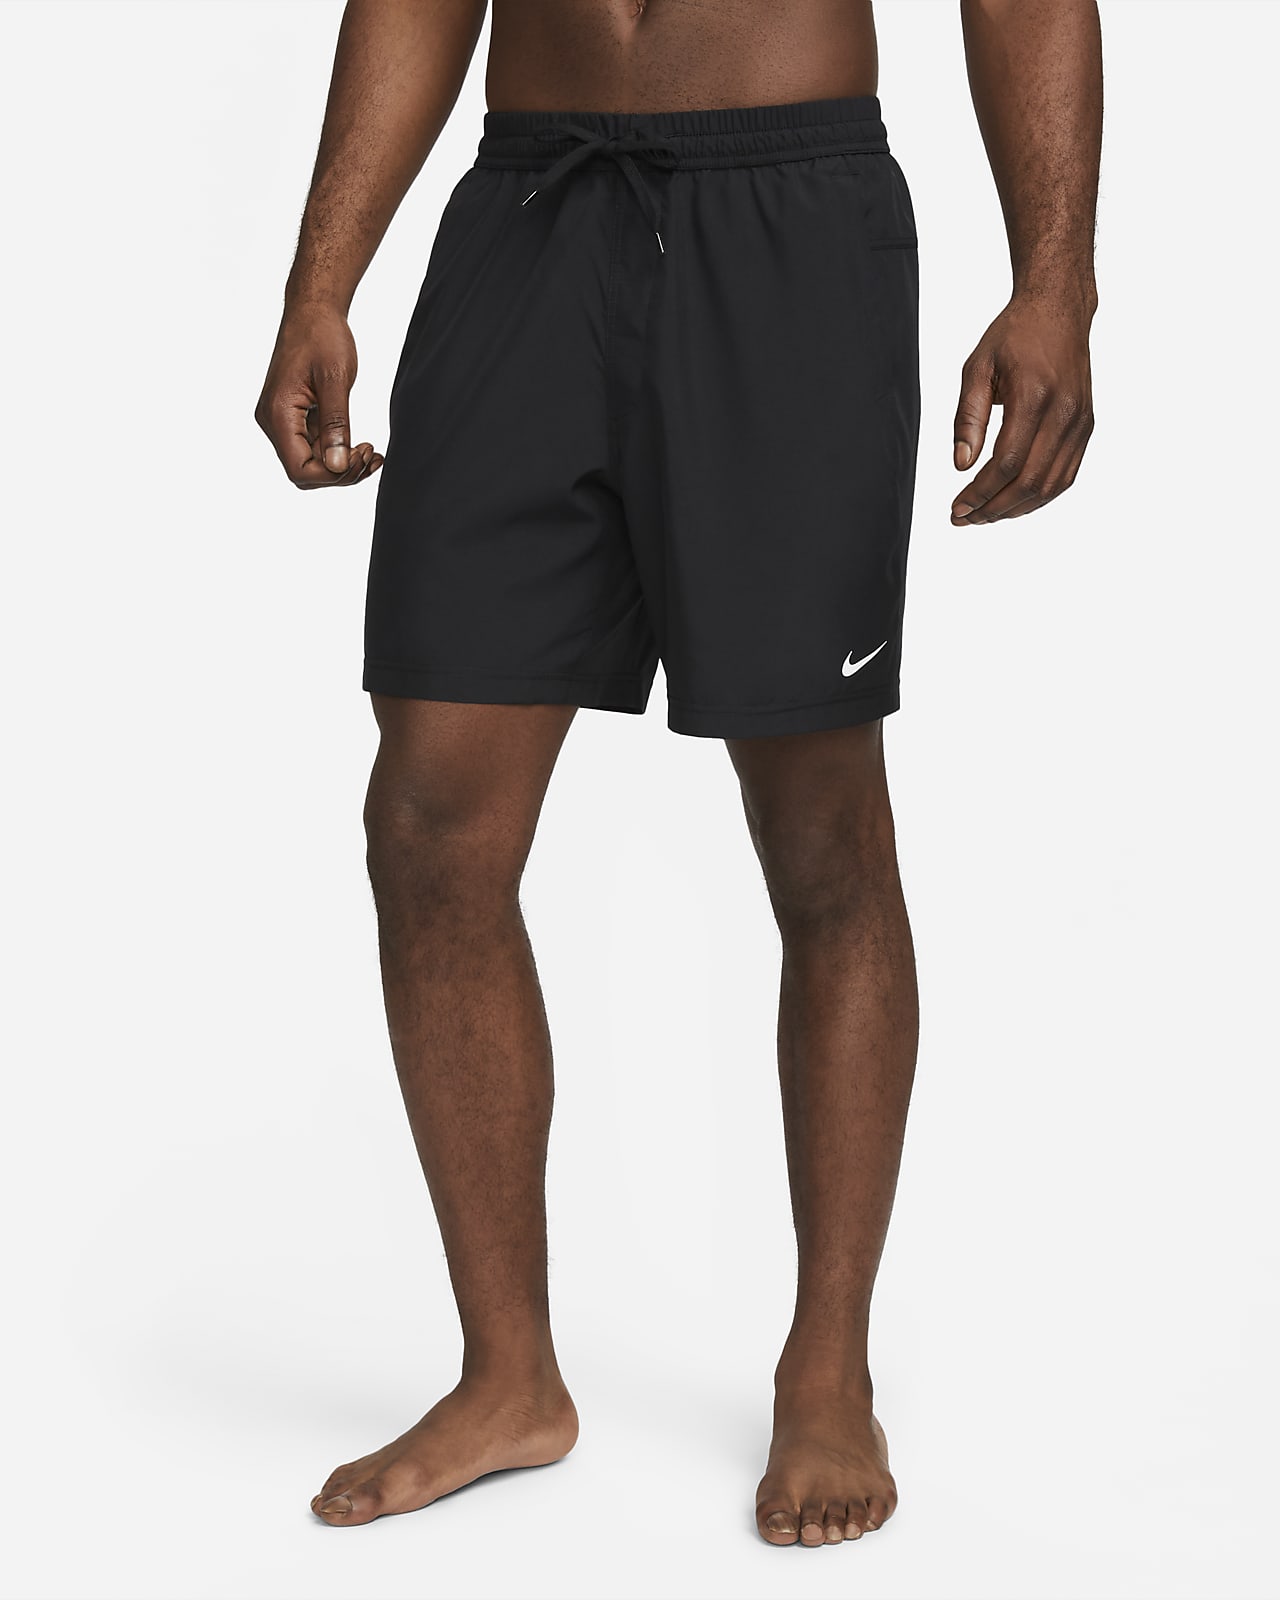 Nike Form Pantalons curts Dri-FIT versàtils de 18 cm sense folre - Home